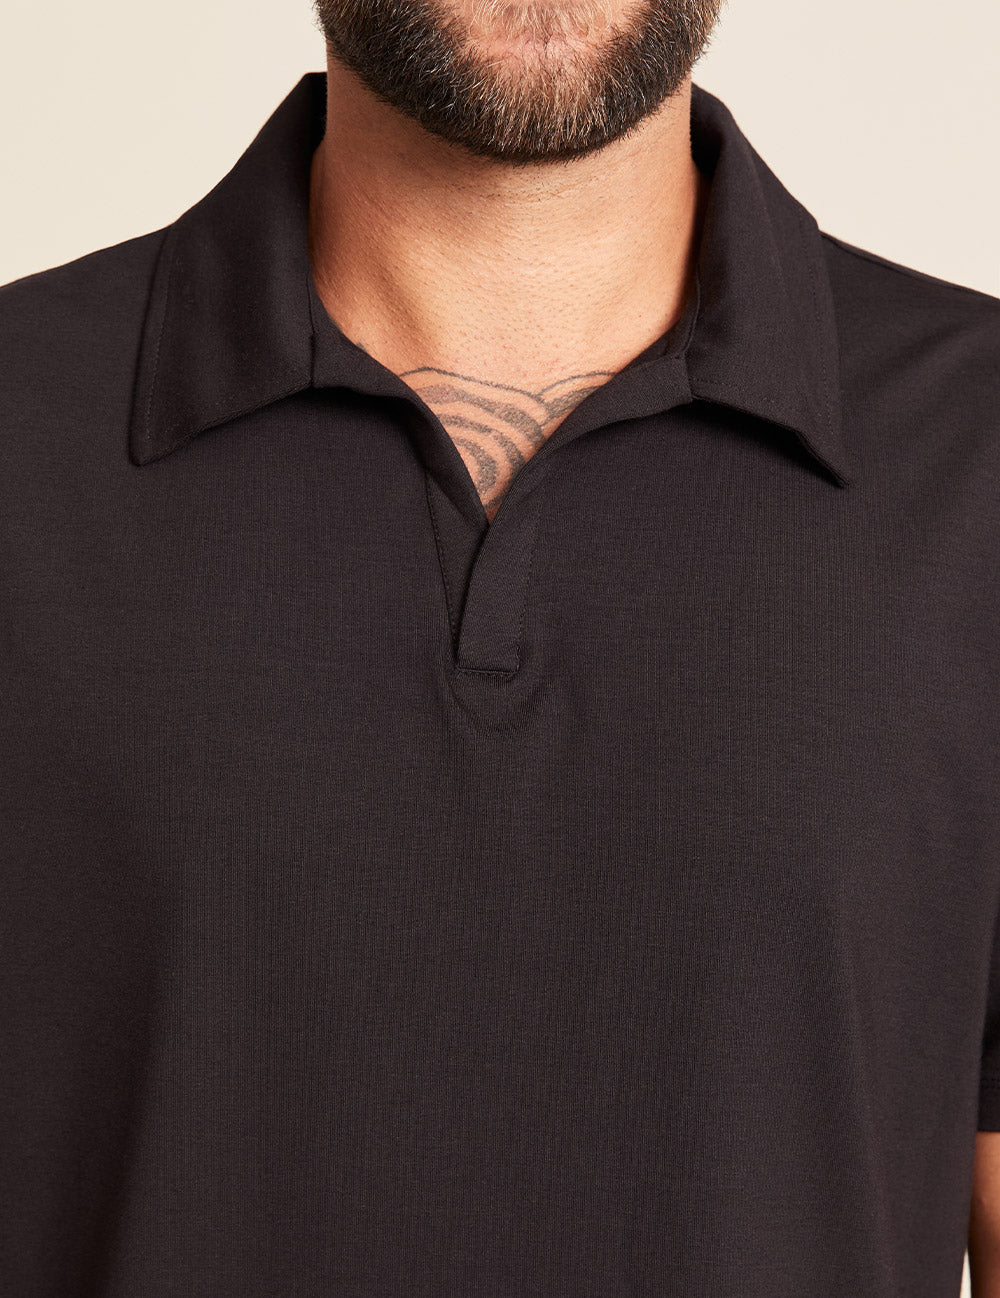 Boody Men's Classic Polo Shirt in Black Detail